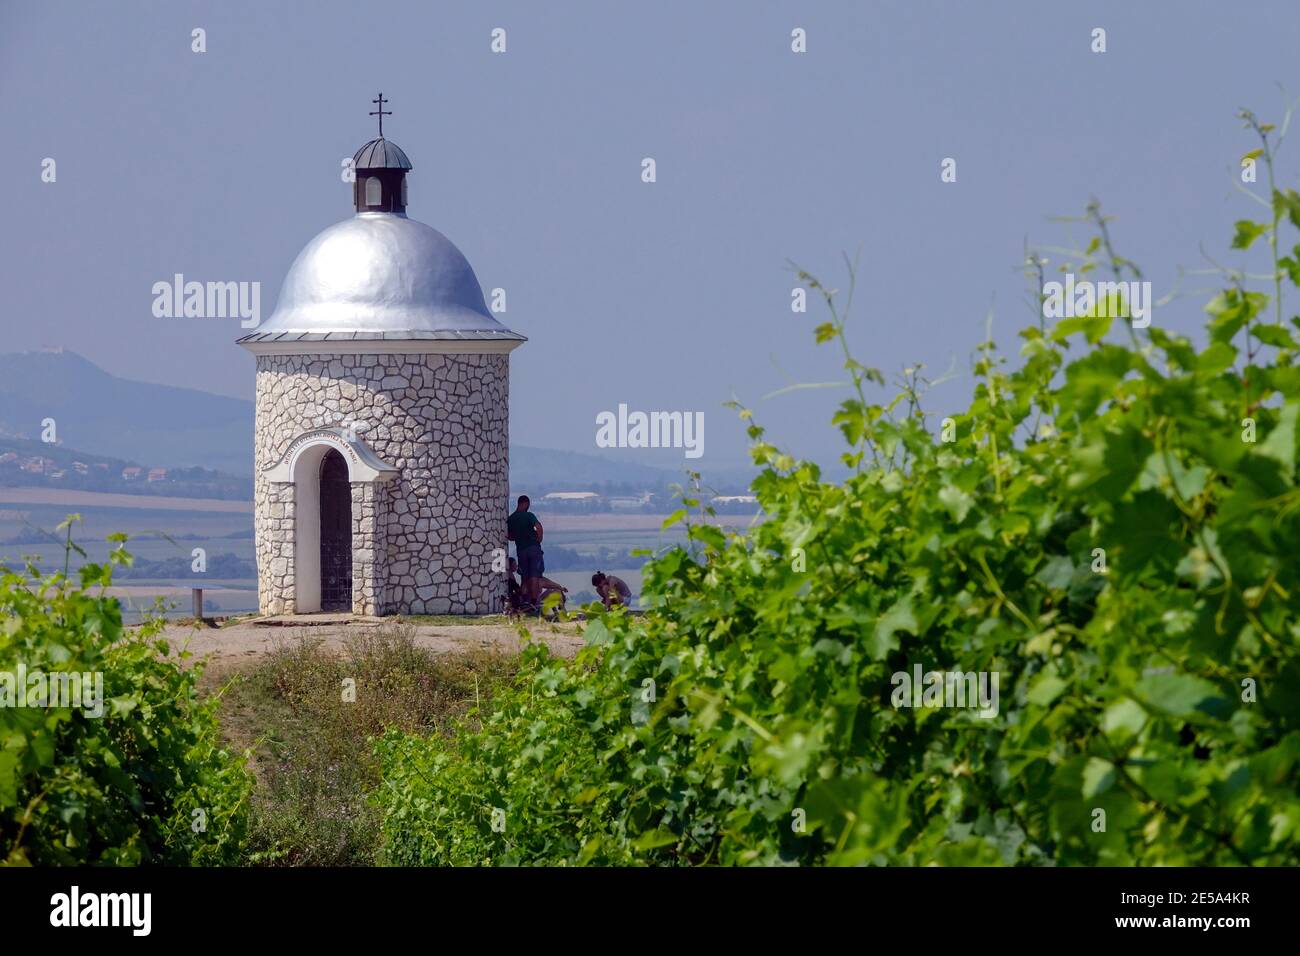 Chapel standing among vineyards, Rural scenery South Moravia Czech Republic Stock Photo